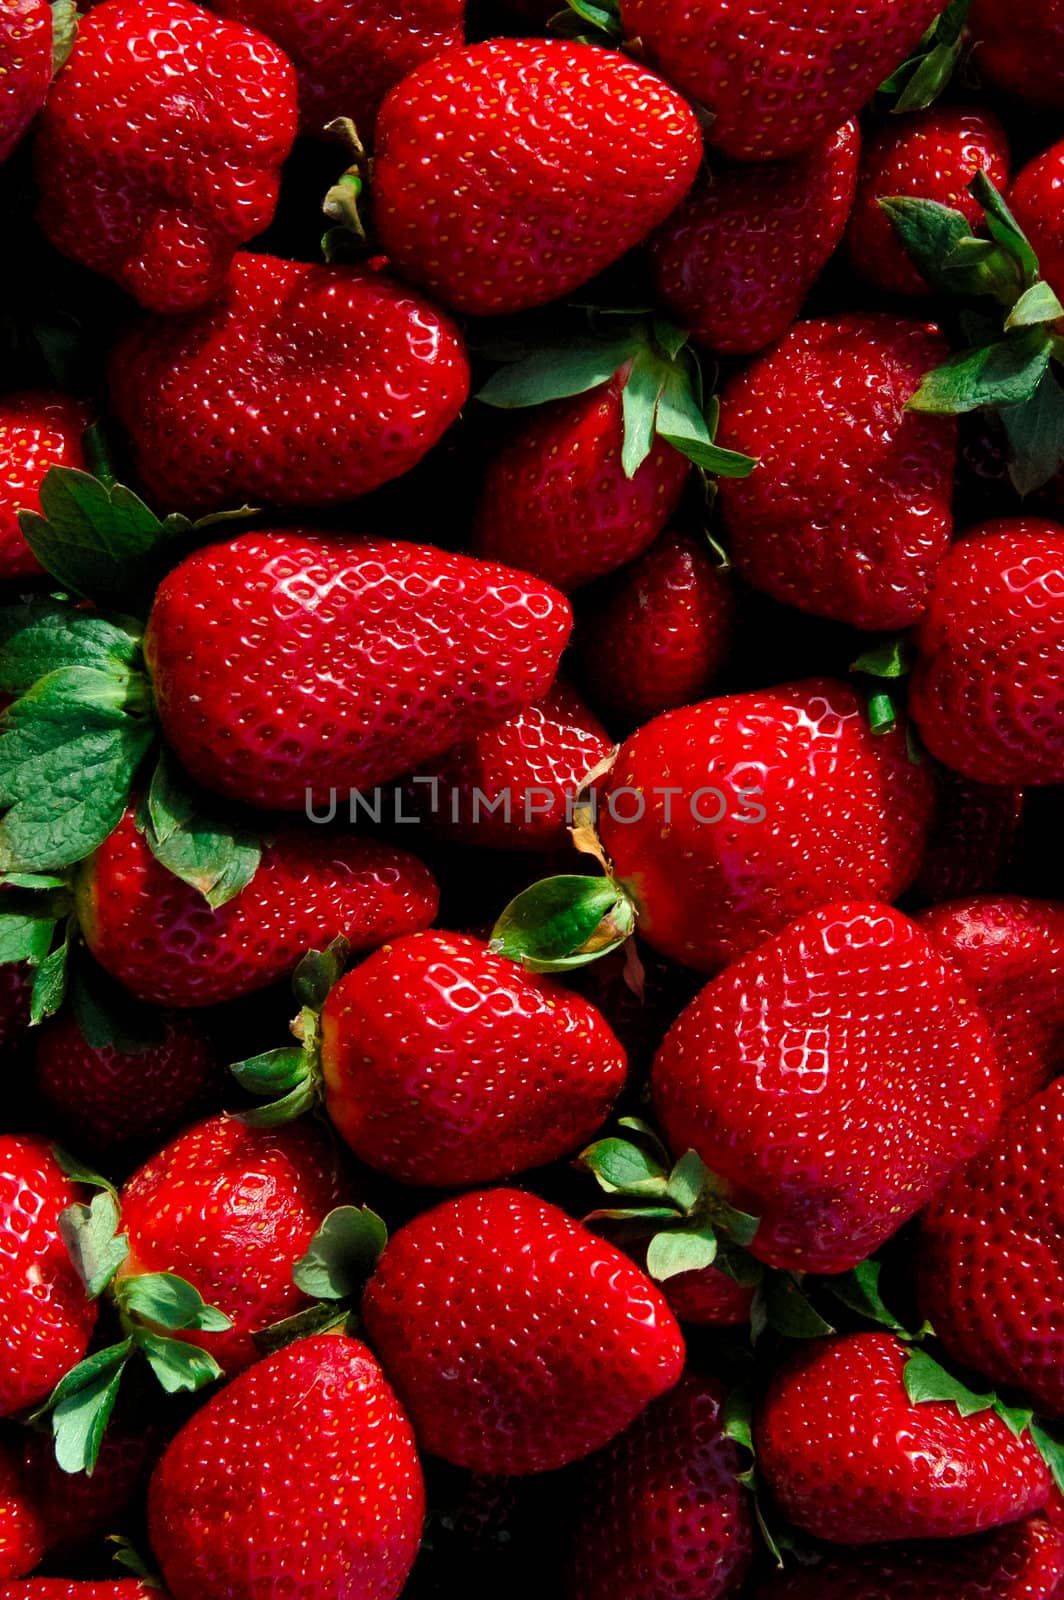 Fresh Strawberries at the market